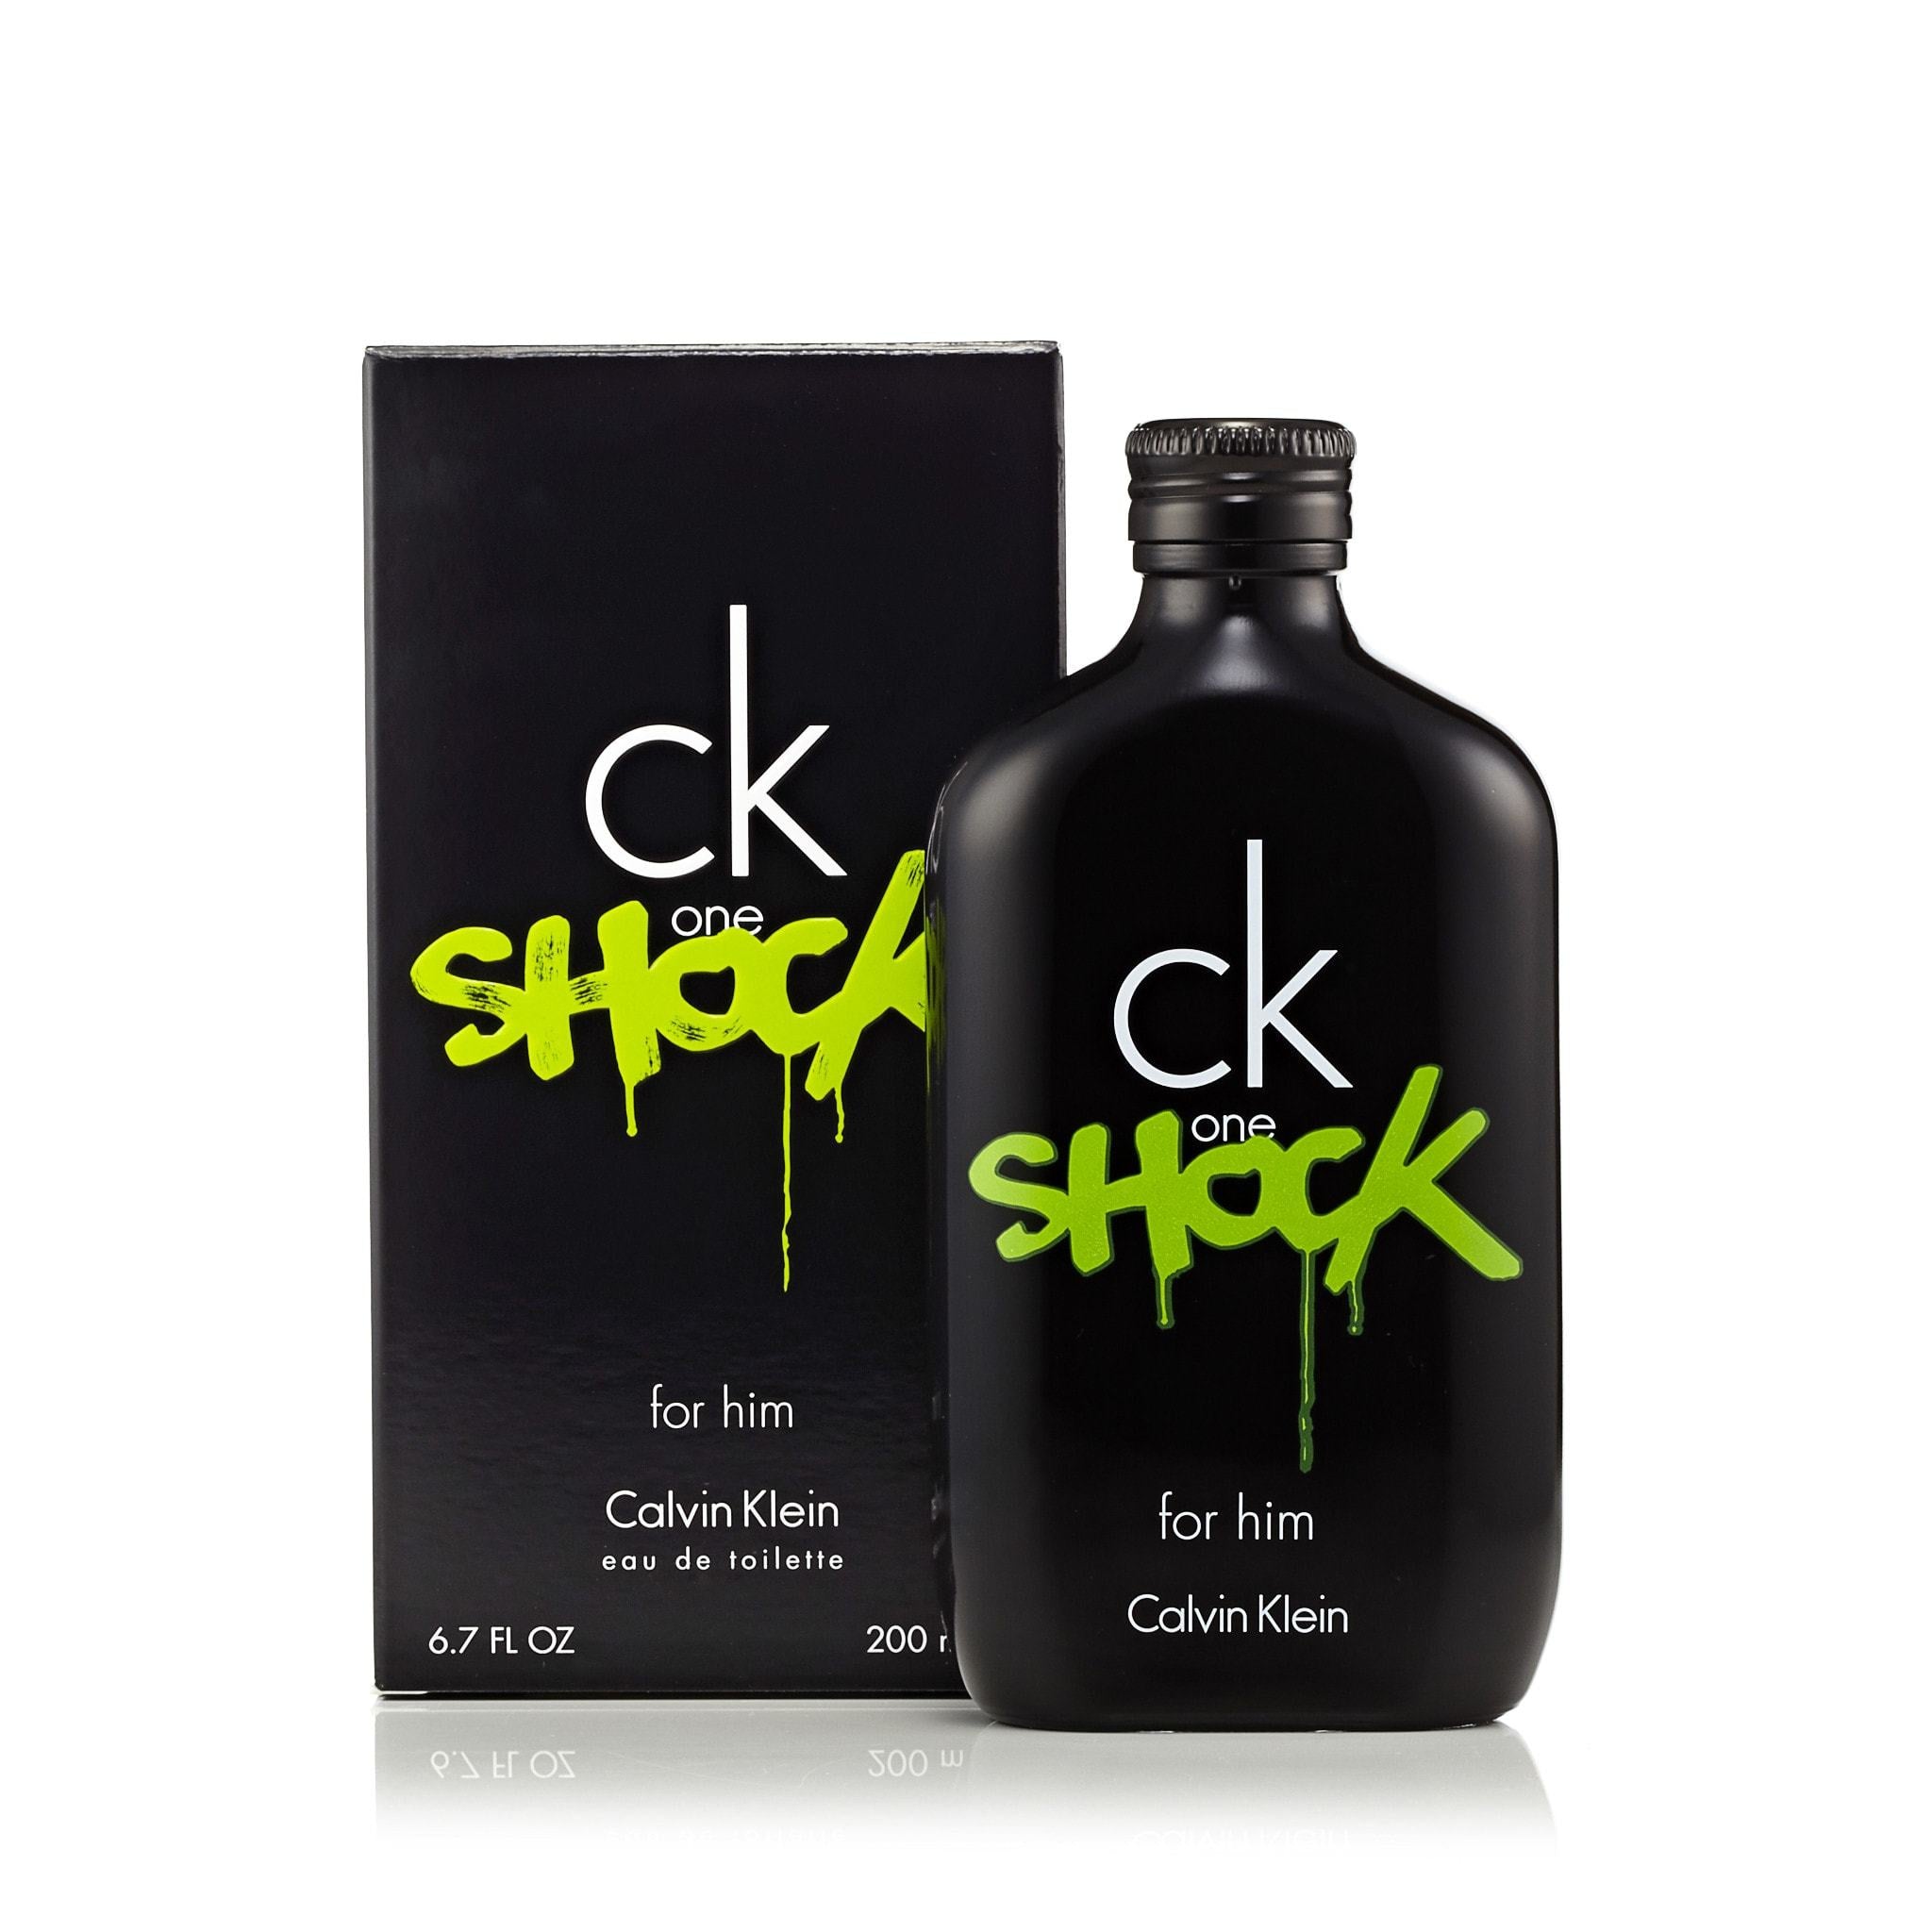 CK One Shock Eau de Toilette Spray for Men by Calvin Klein